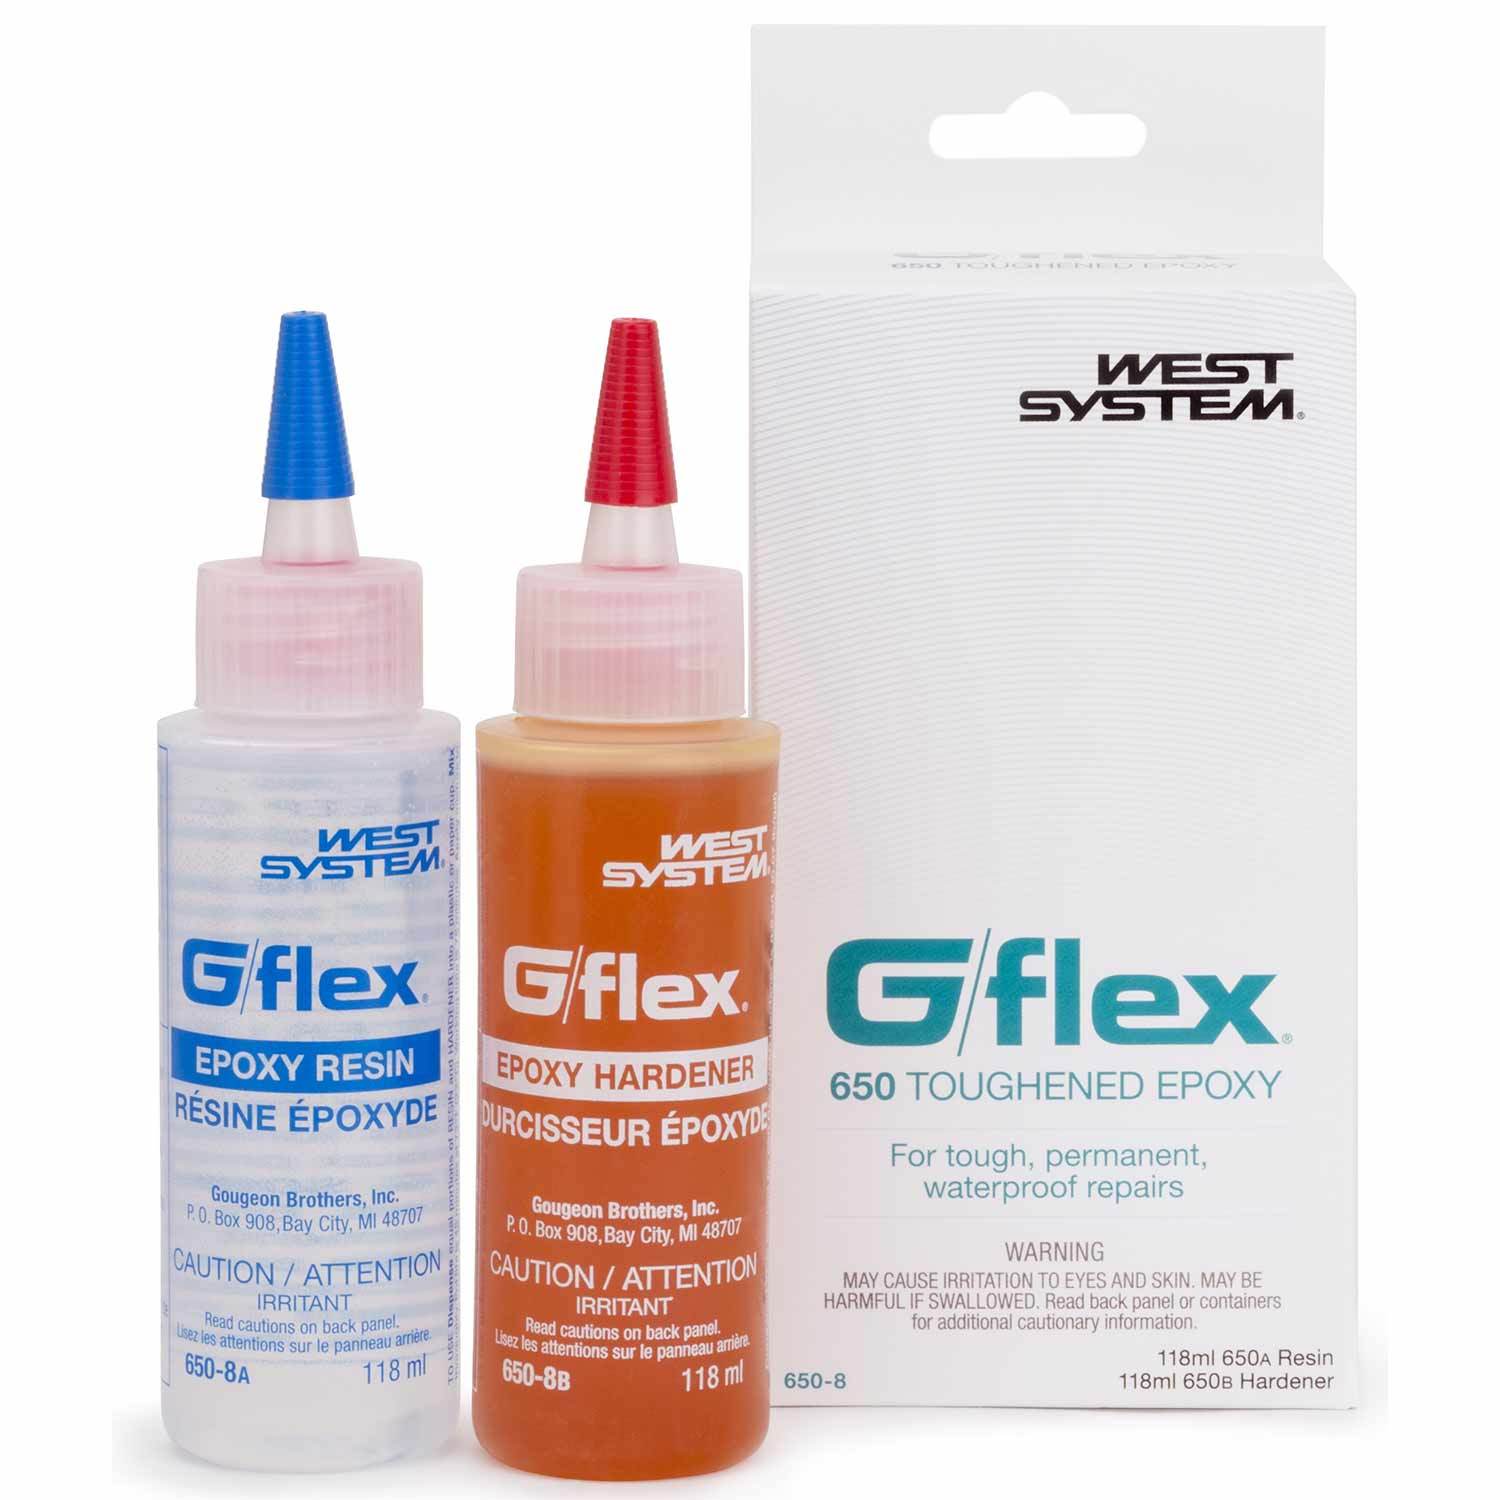 WEST SYSTEM G/flex 650-8 Liquid Epoxy, Resin and Hardener